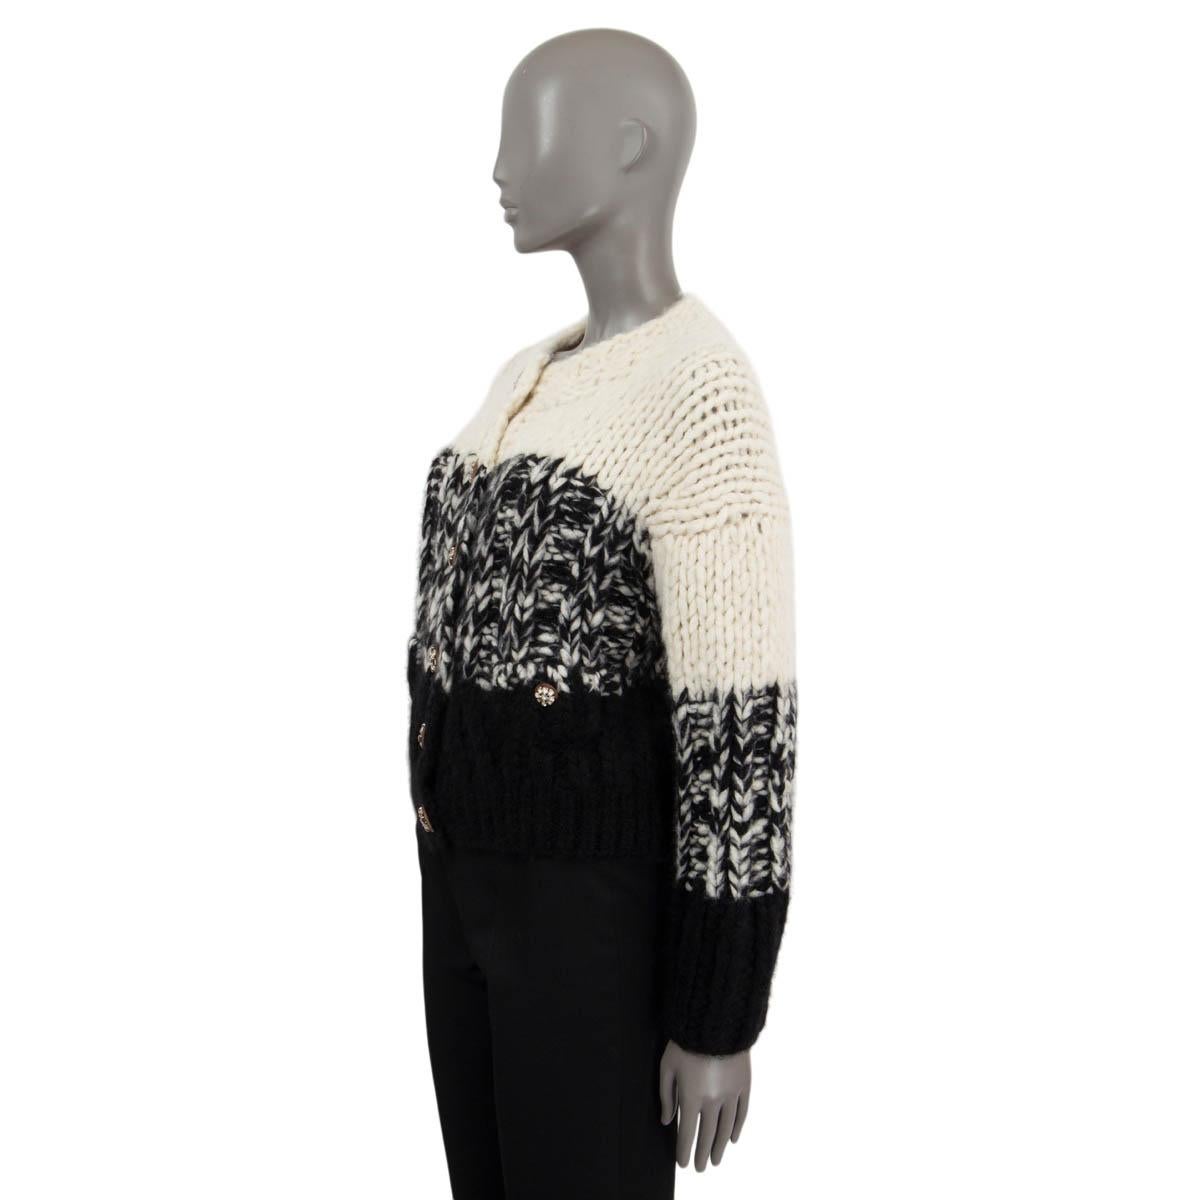 Women's CHANEL black & white cashmere 2019 CHUNKY Cardigan Sweater 38 S 19K